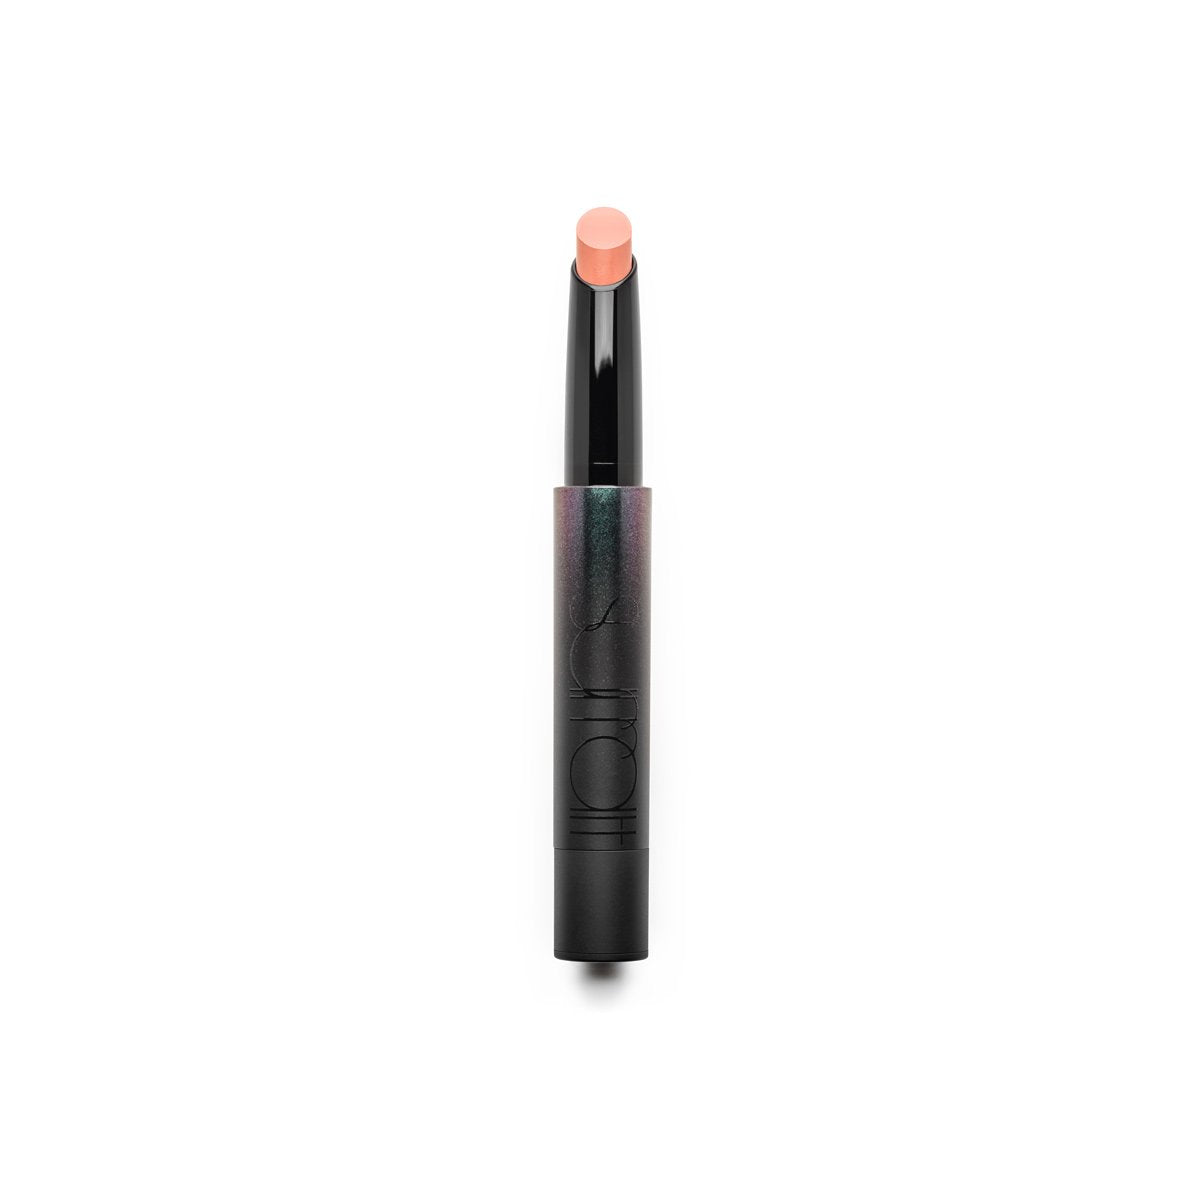 PARAMOUR - PEACHY CORAL - creamy moisturizing lipstick lip balm in peachy coral shade